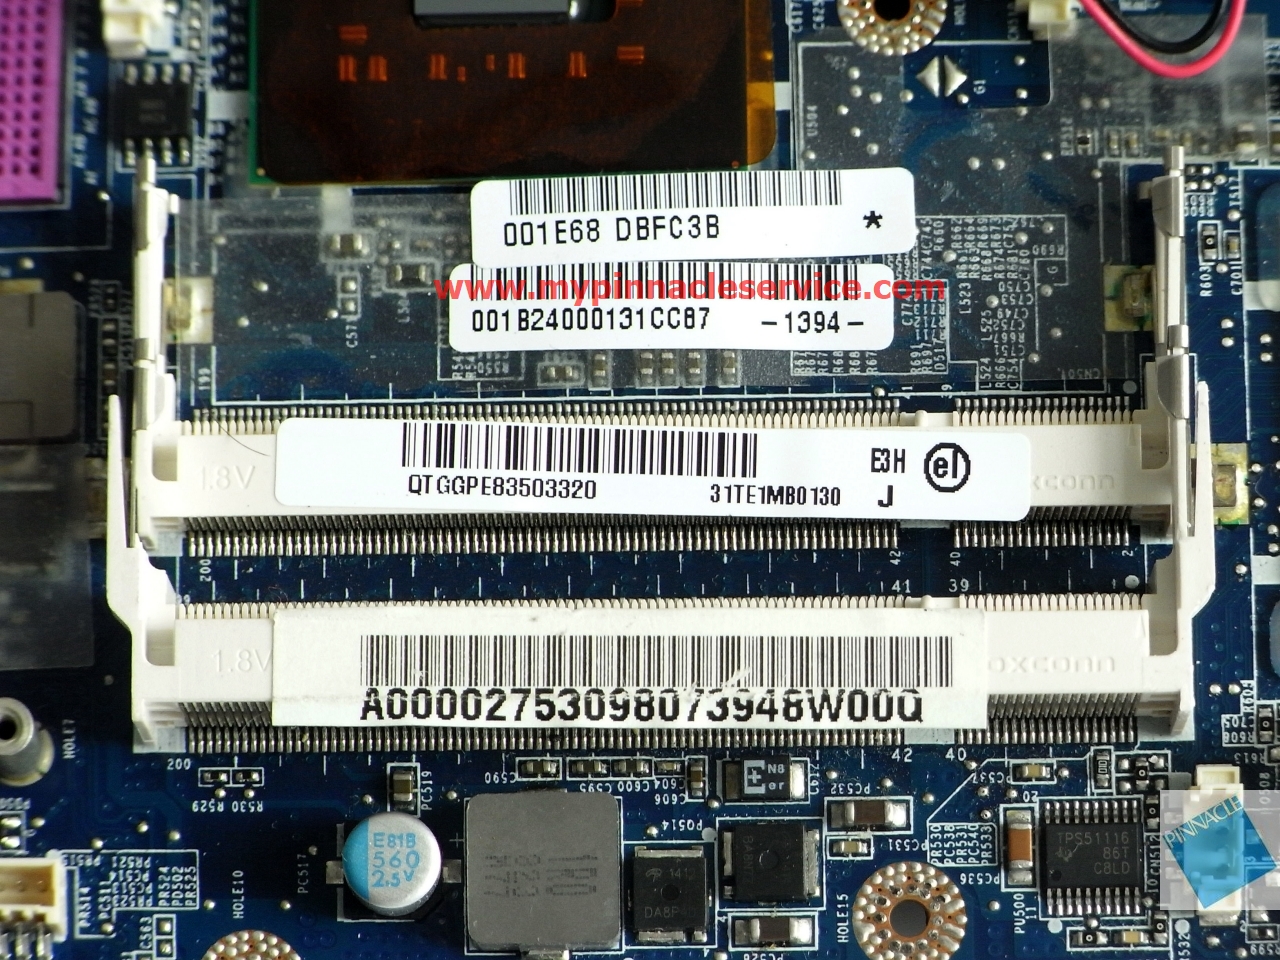 a000027530-motherboard-for-toshiba-satellite-m300-u400-protege-m800-31te1mb0130-1-rimg0145.jpg